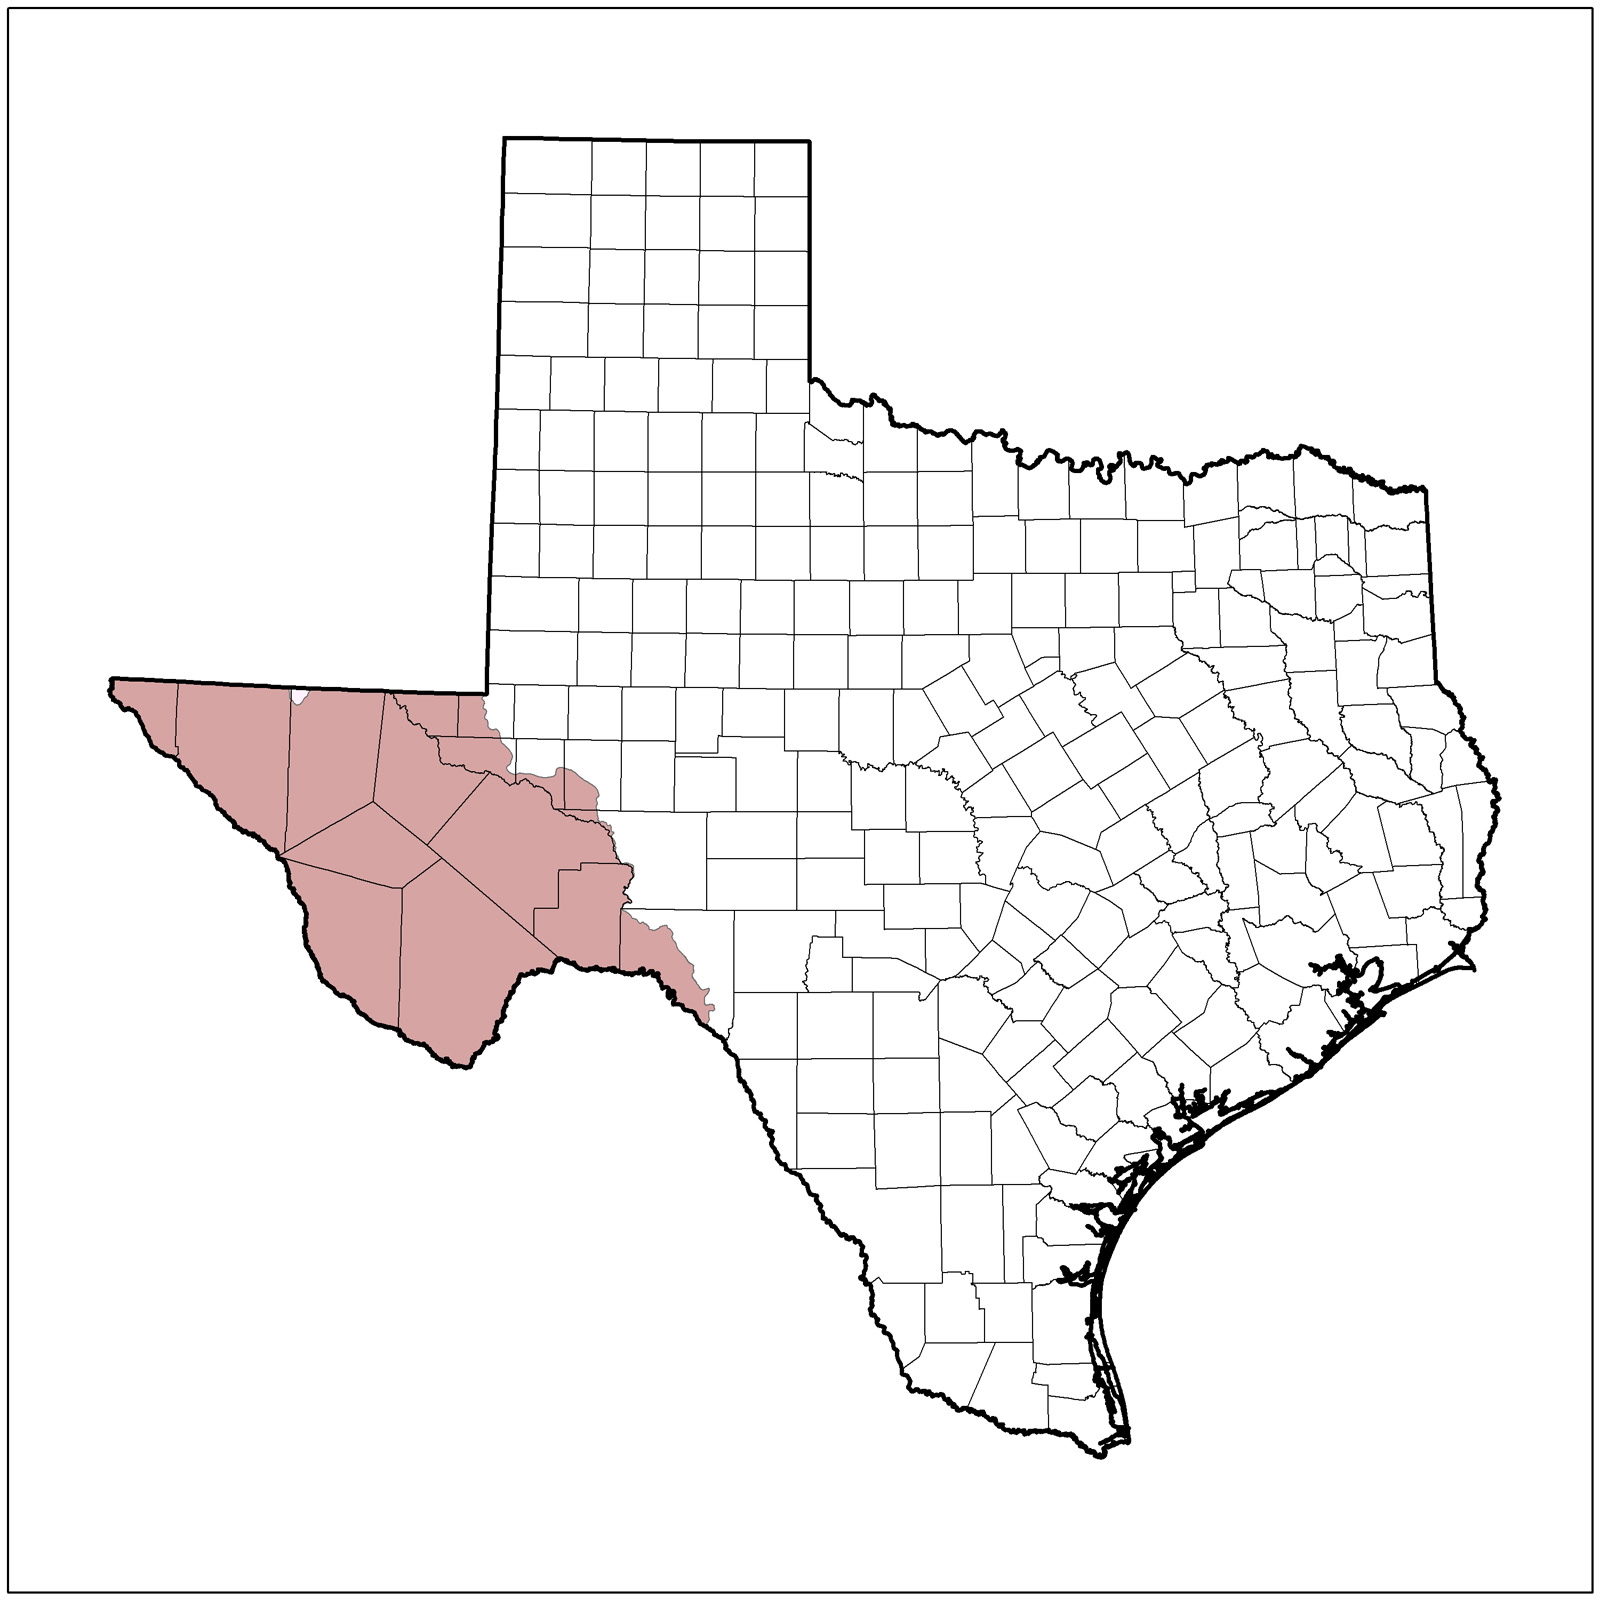 Chihuahuan_Desert Ecoregion of Texas